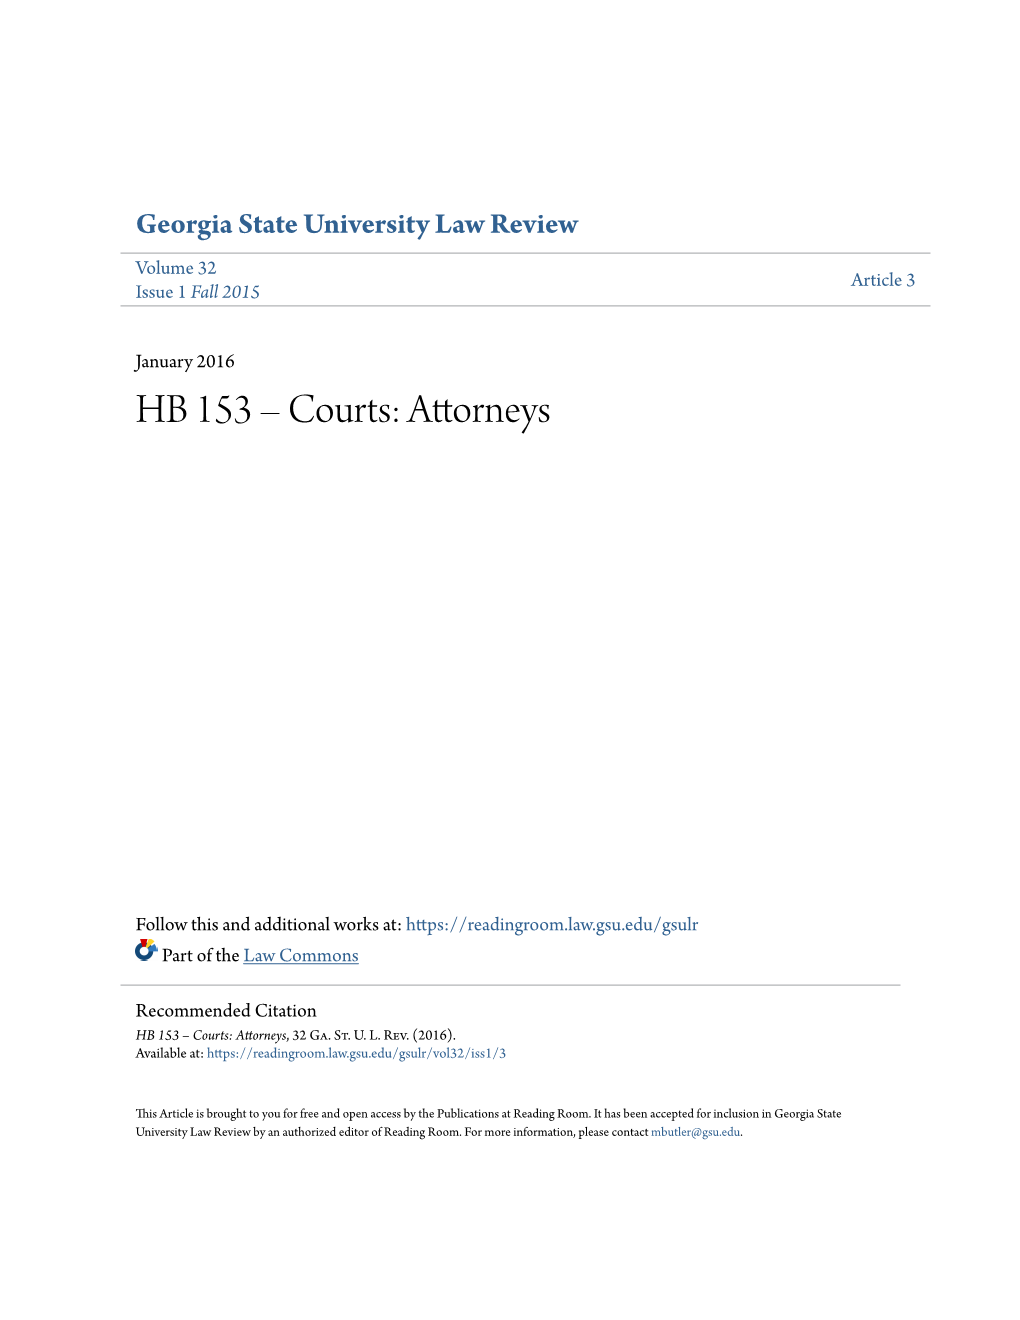 HB 153 – Courts: Attorneys